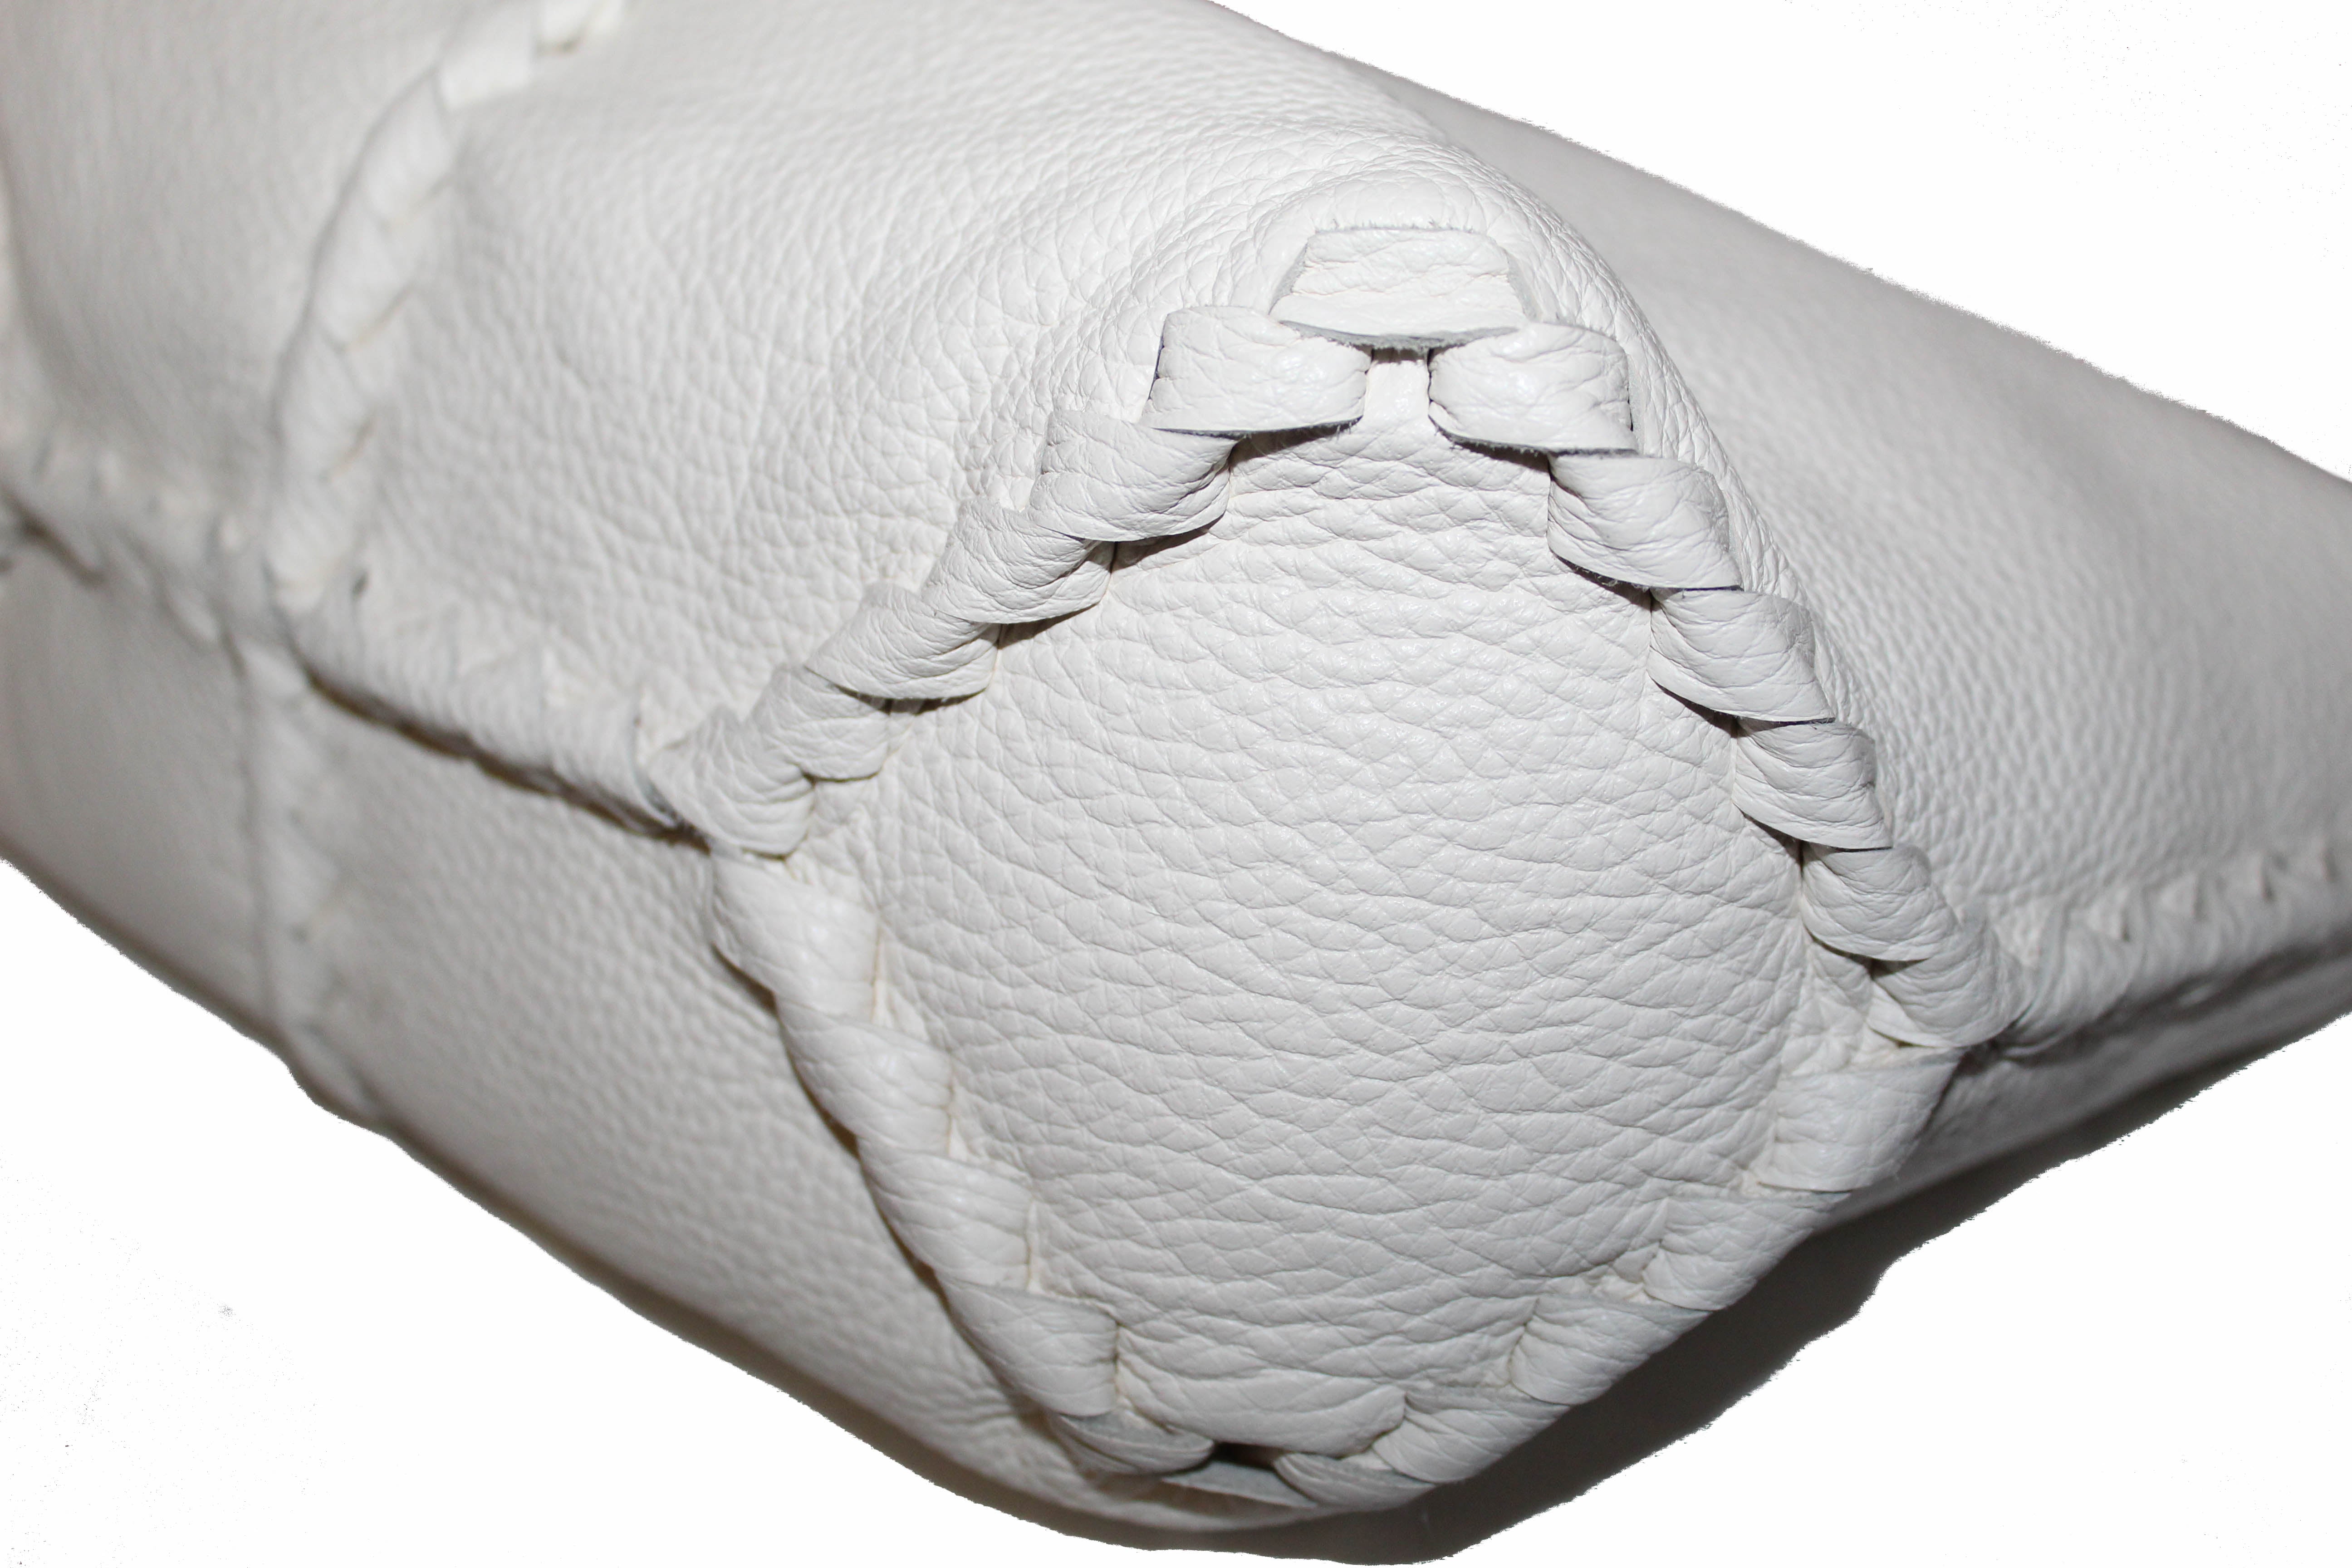 Authentic New Bottega Veneta White Cervo Medium Leather Shoulder Hobo Bag